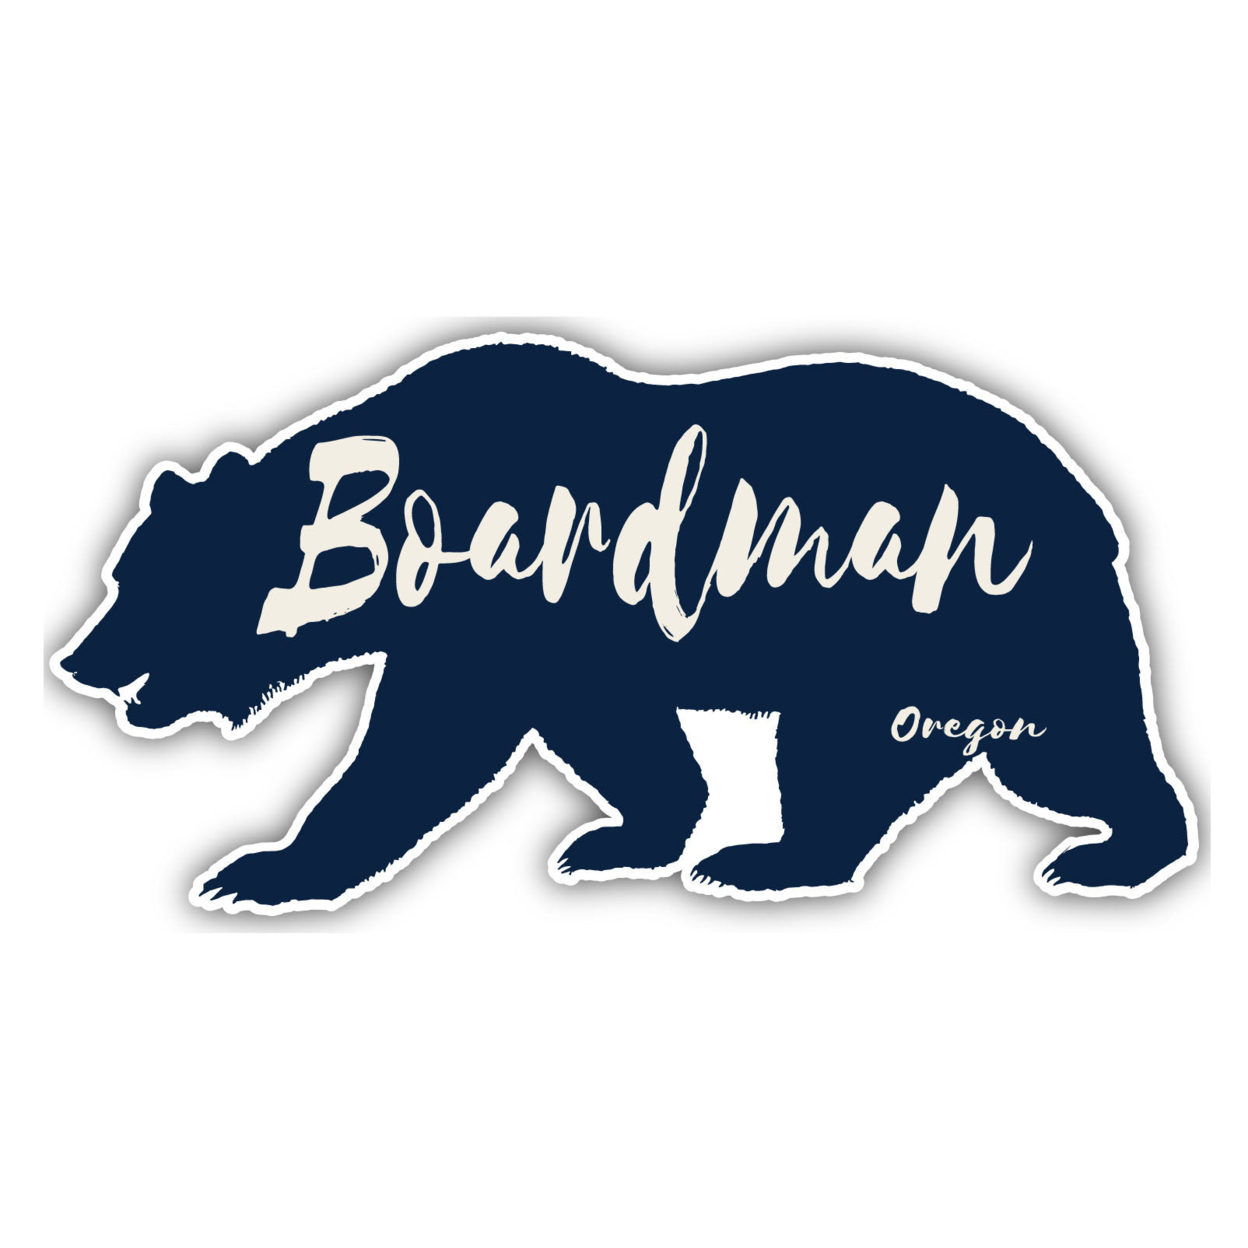 Boardman Oregon Souvenir Decorative Stickers (Choose Theme And Size) - 4-Pack, 12-Inch, Bear